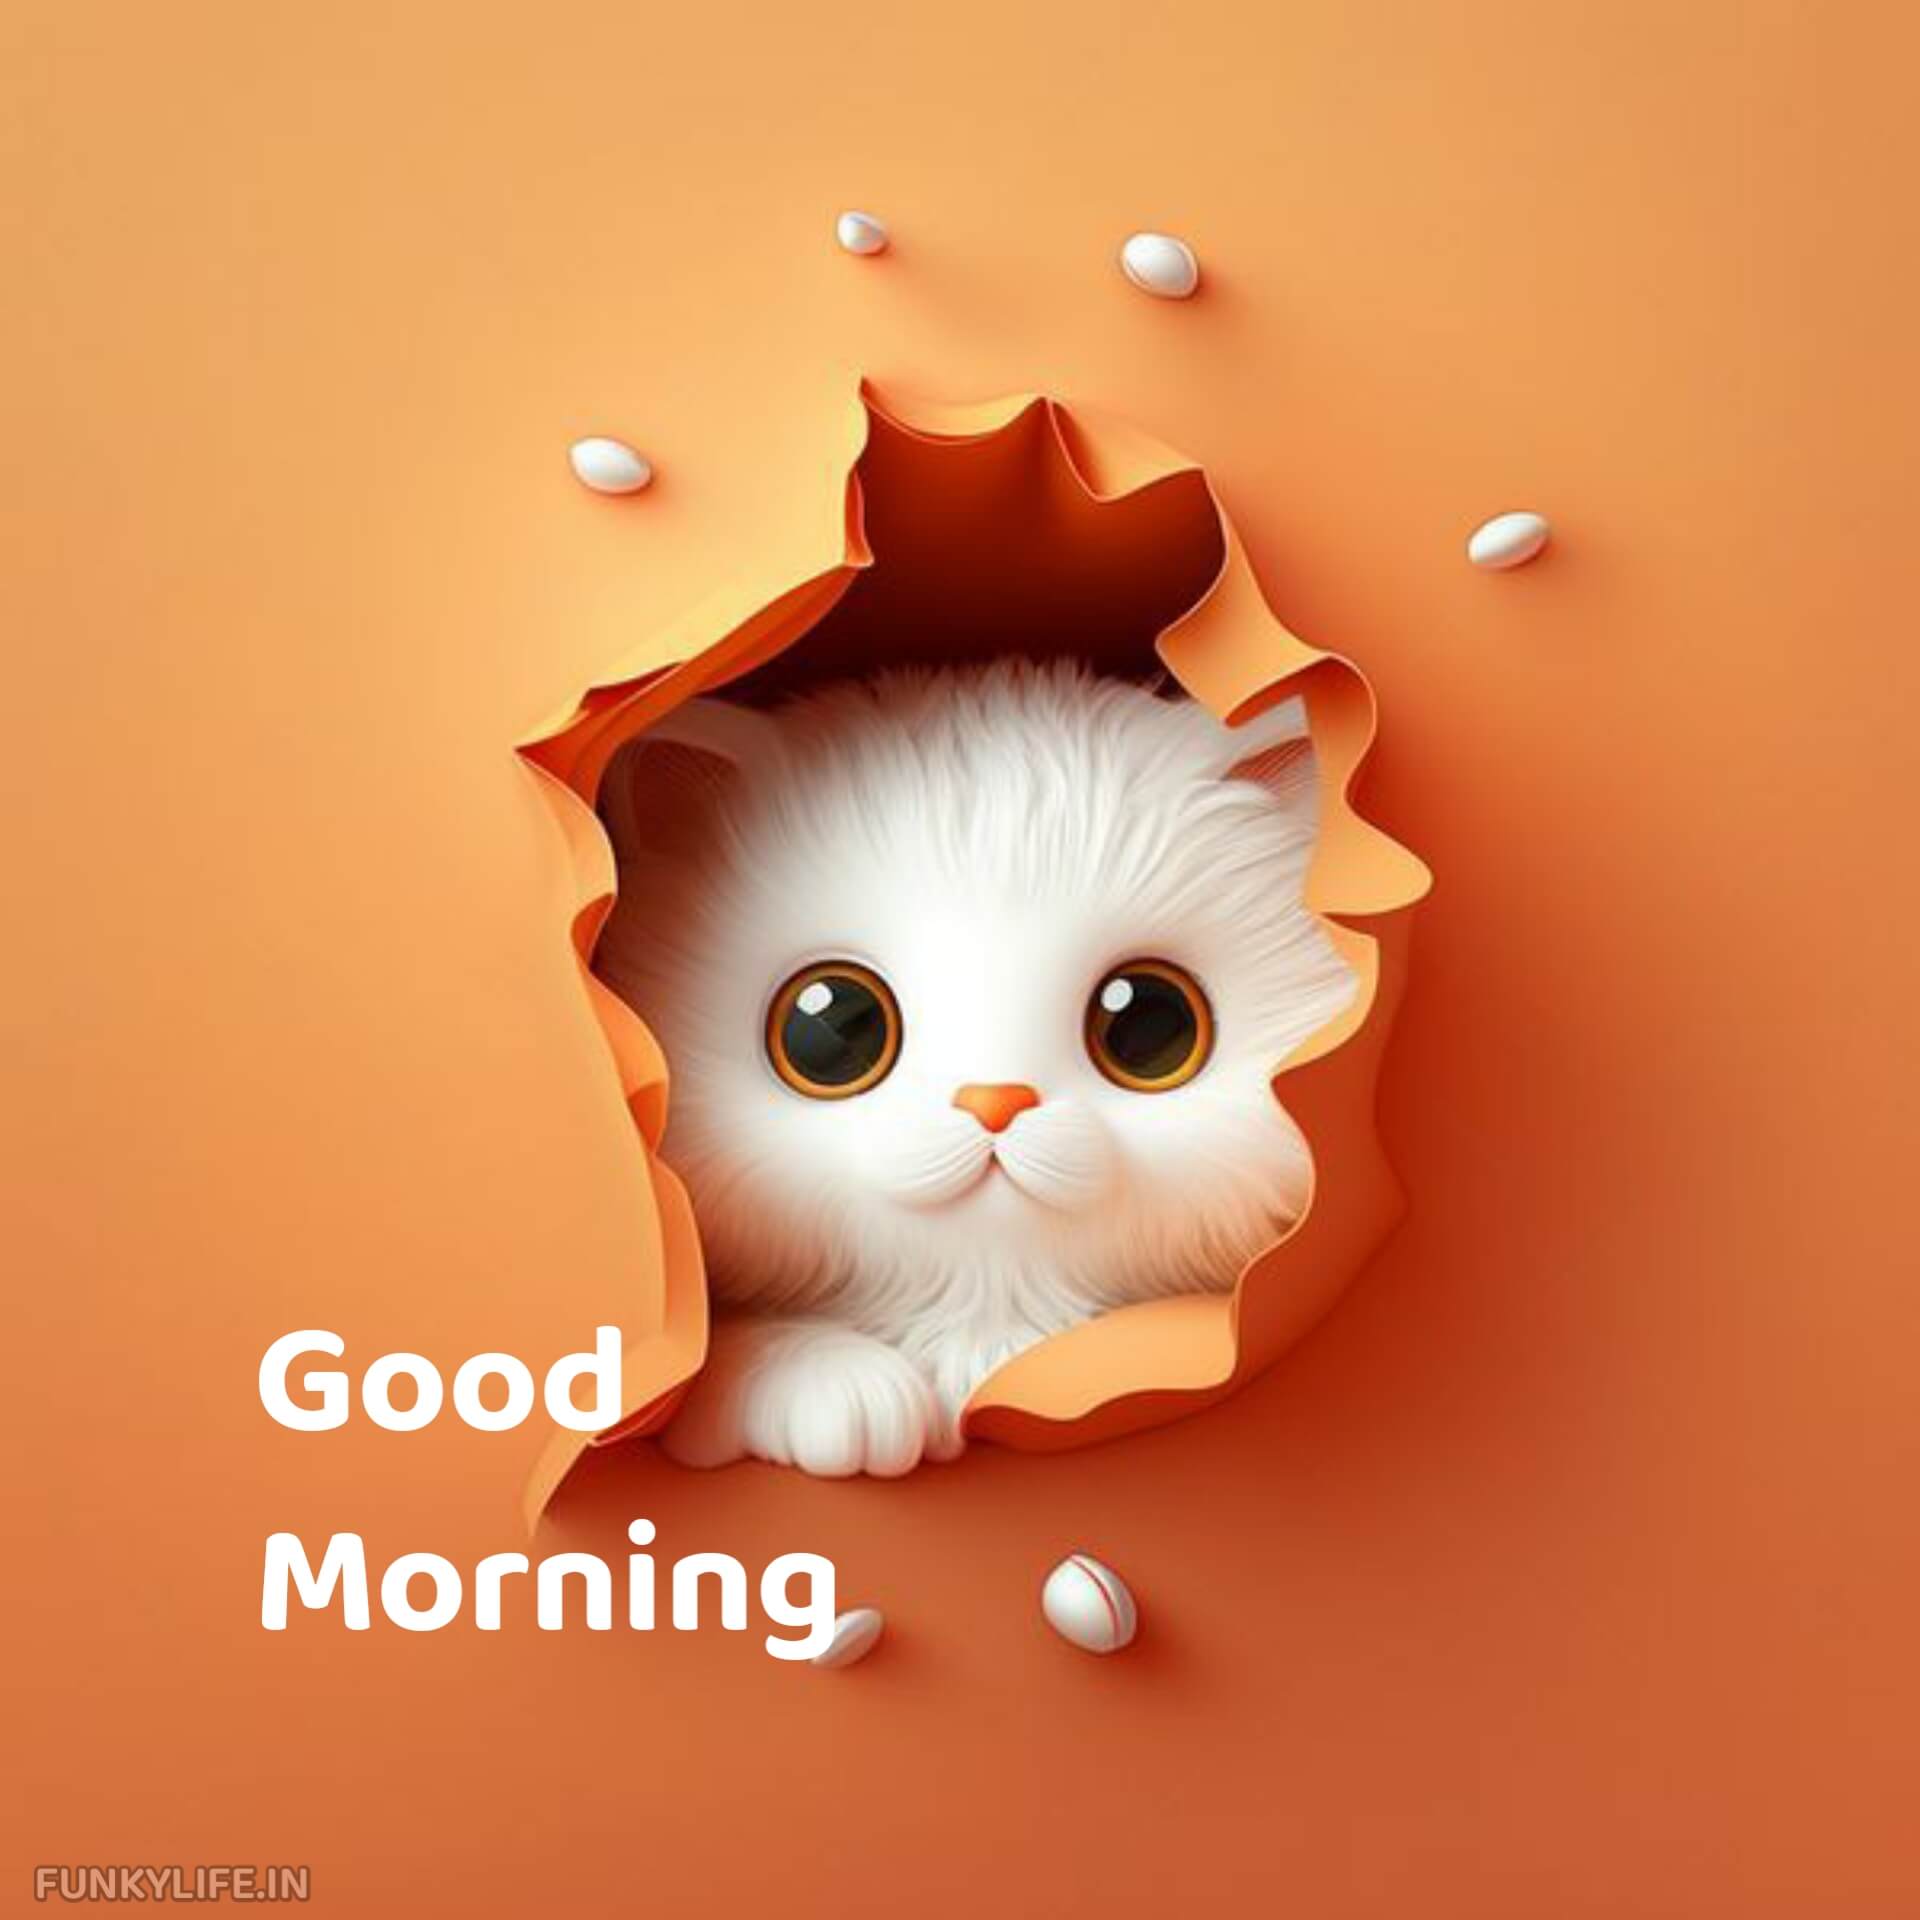 Cute Good Morning Image